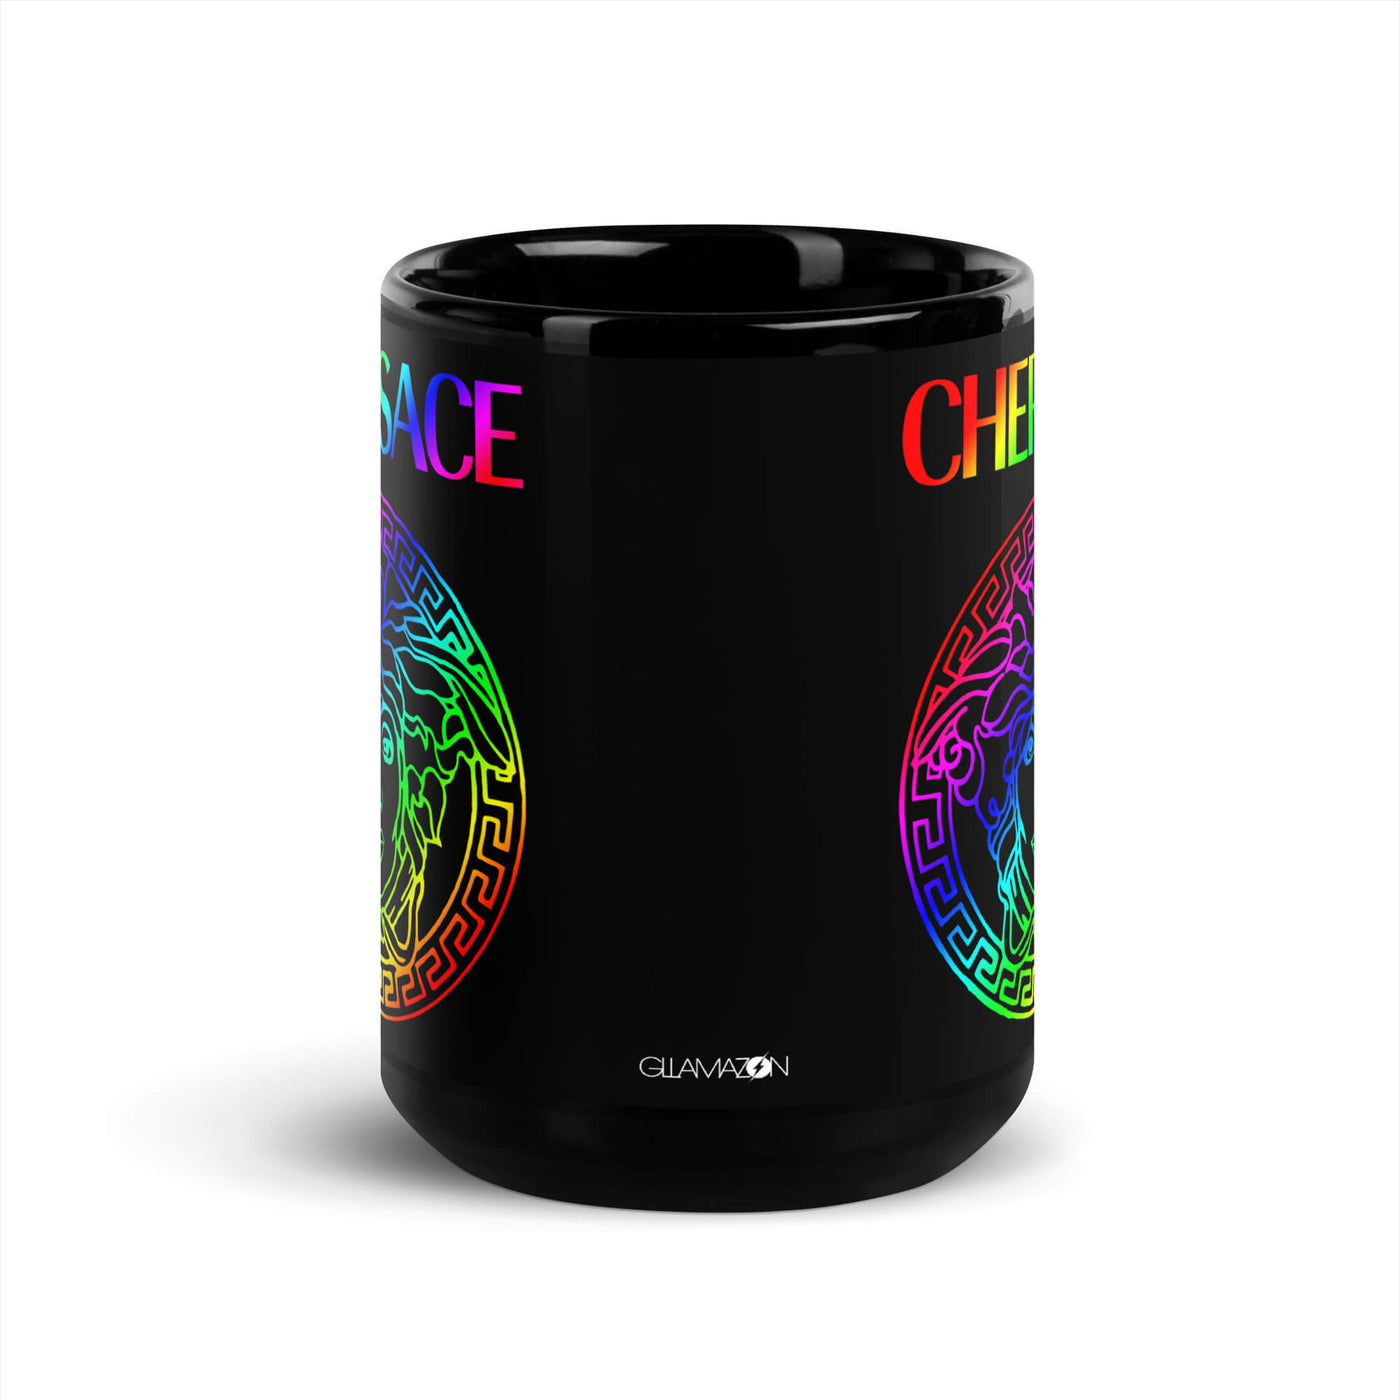 CHERSACE by Gllamazon black glossy mug black 15oz front